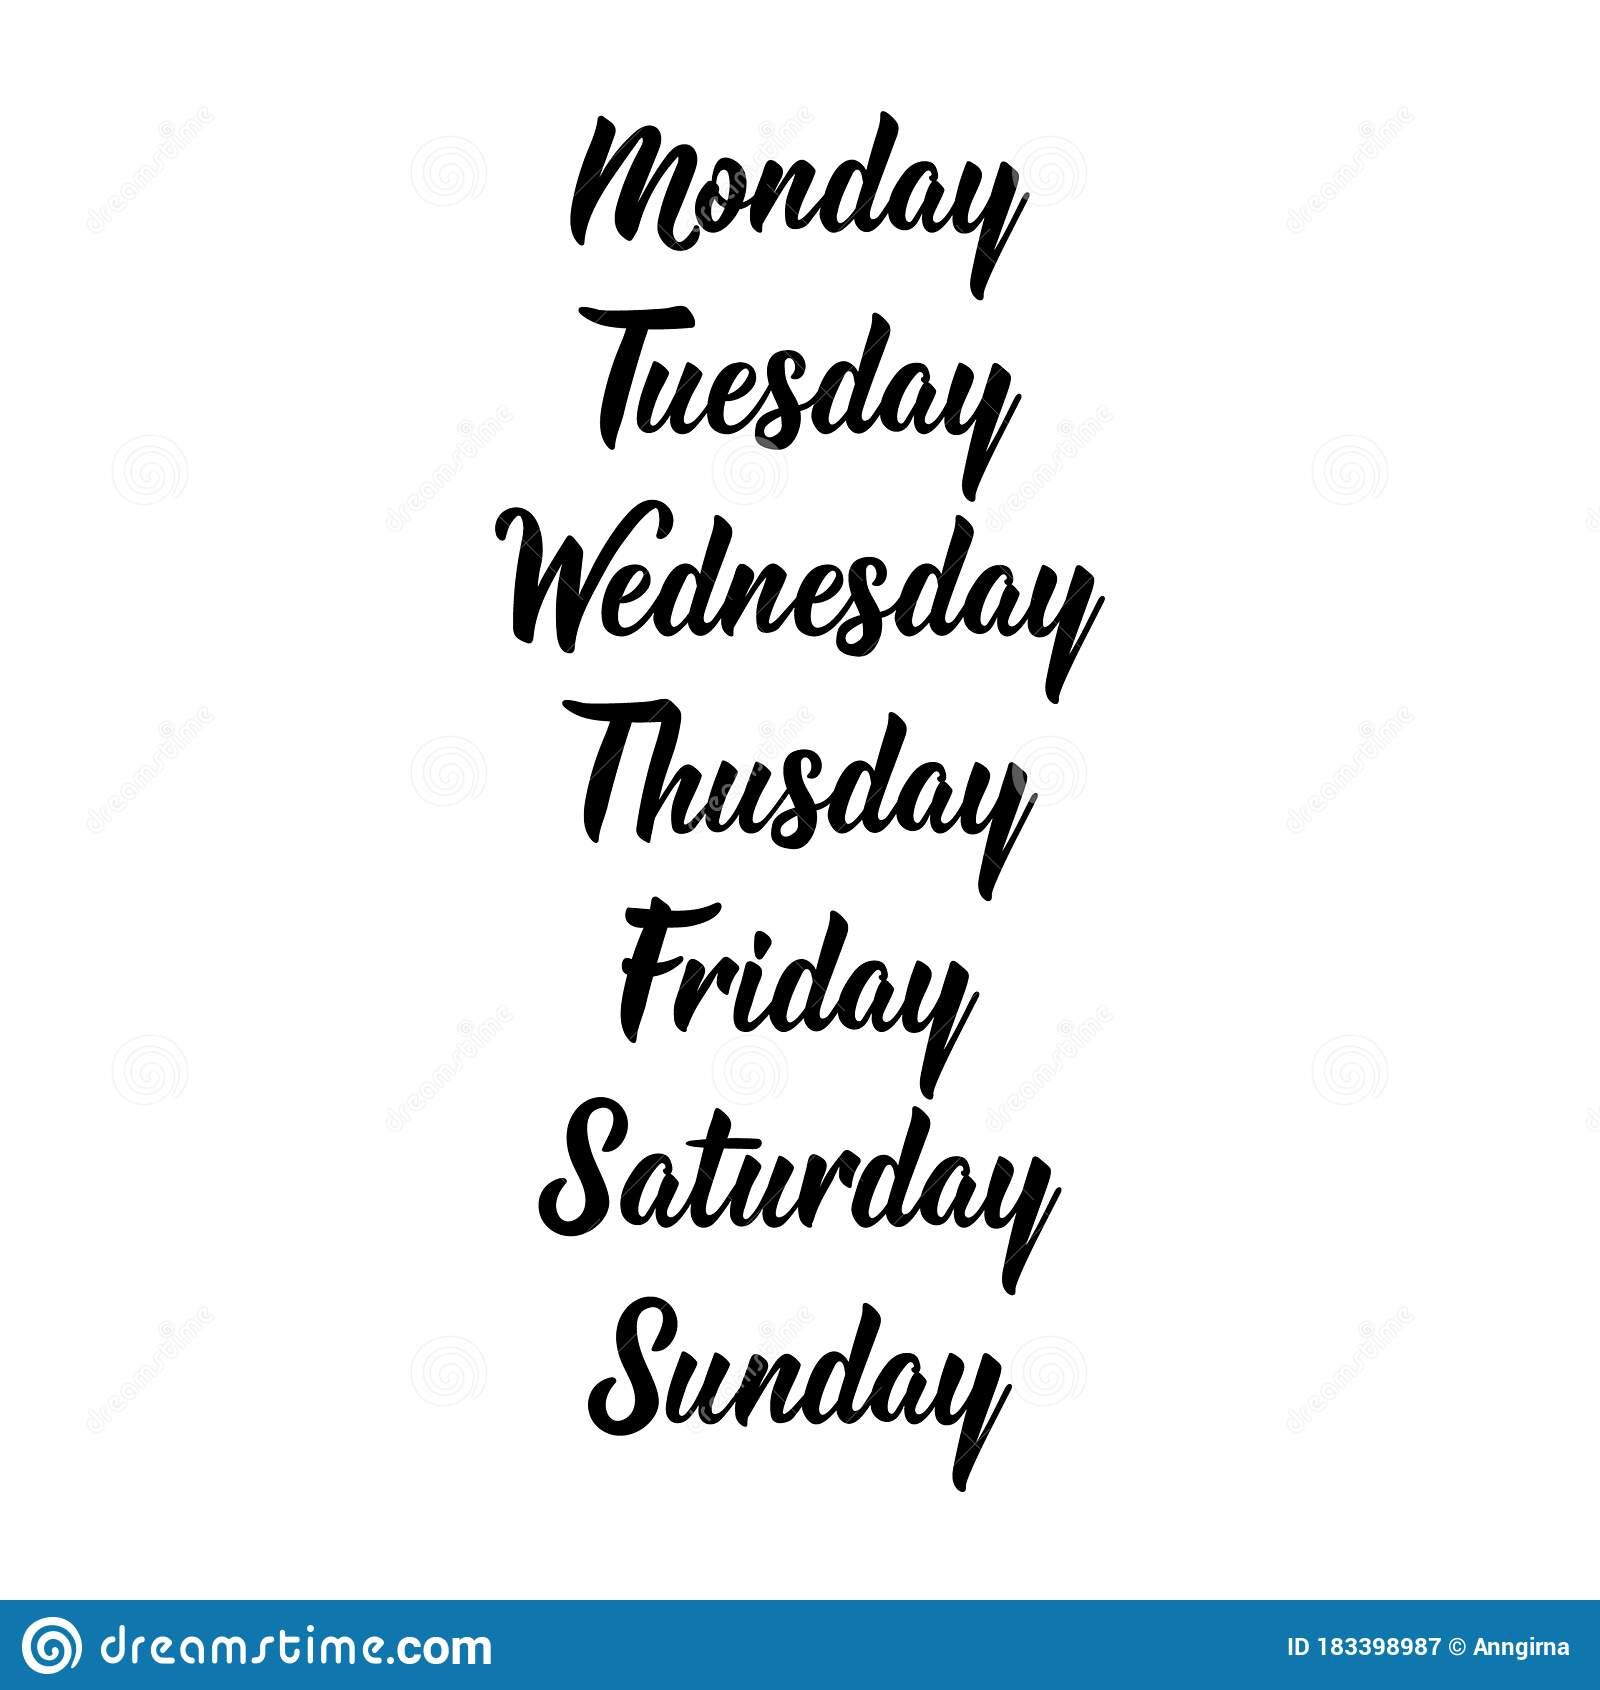 Days Of The Week  Monday, Tuesday, Wednesday, Thursday, Friday regarding Sunday To 7 Saturday.